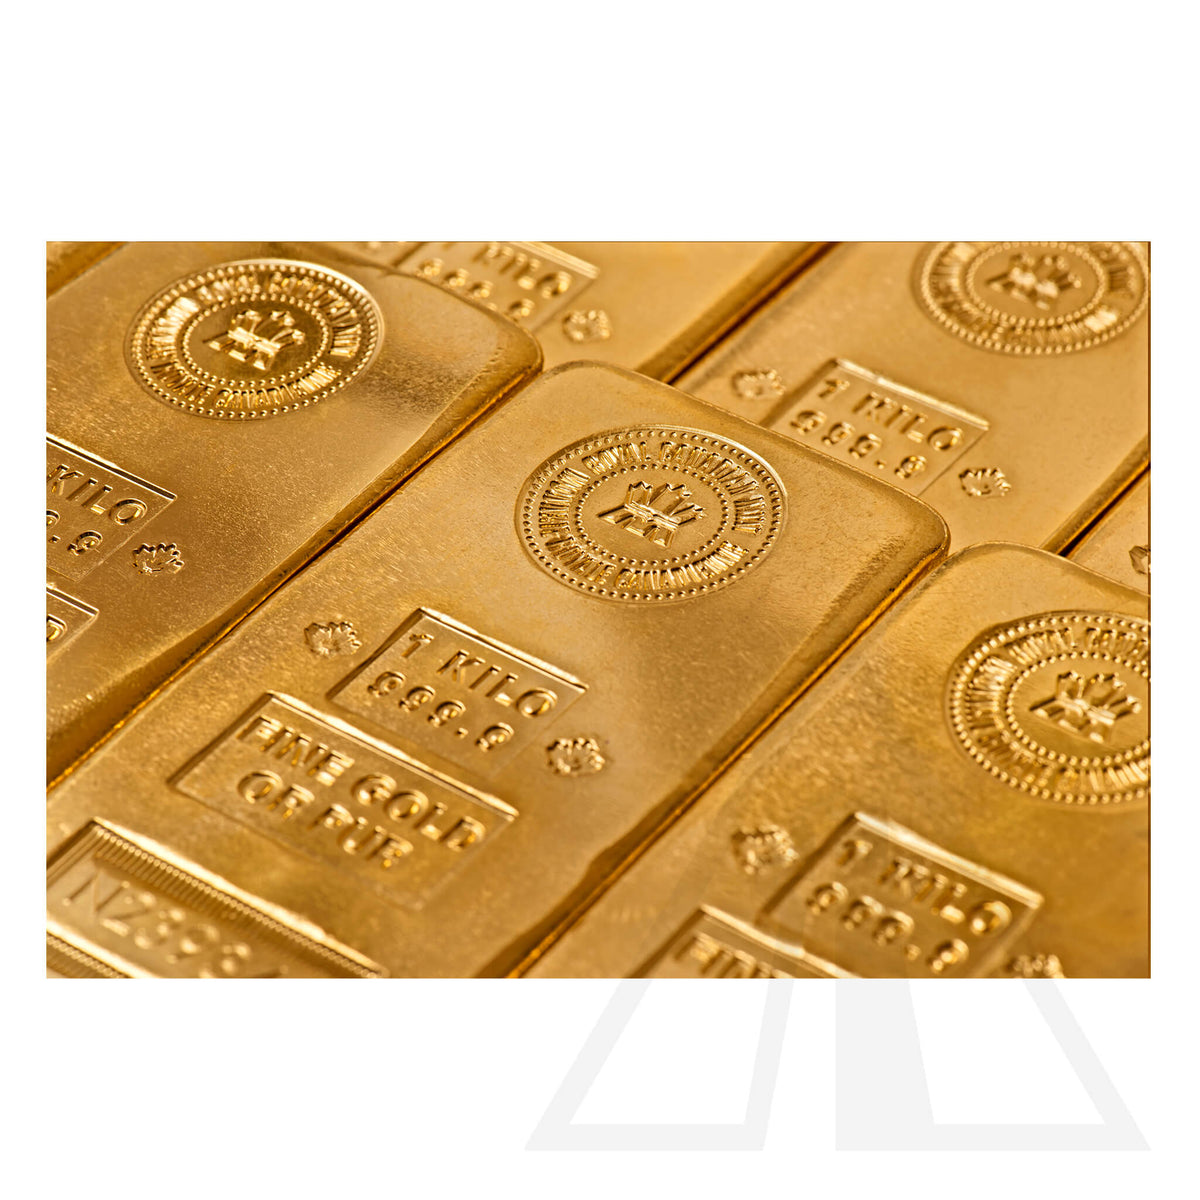 1 kg Gold Bar (Assorted LBMA Brands)